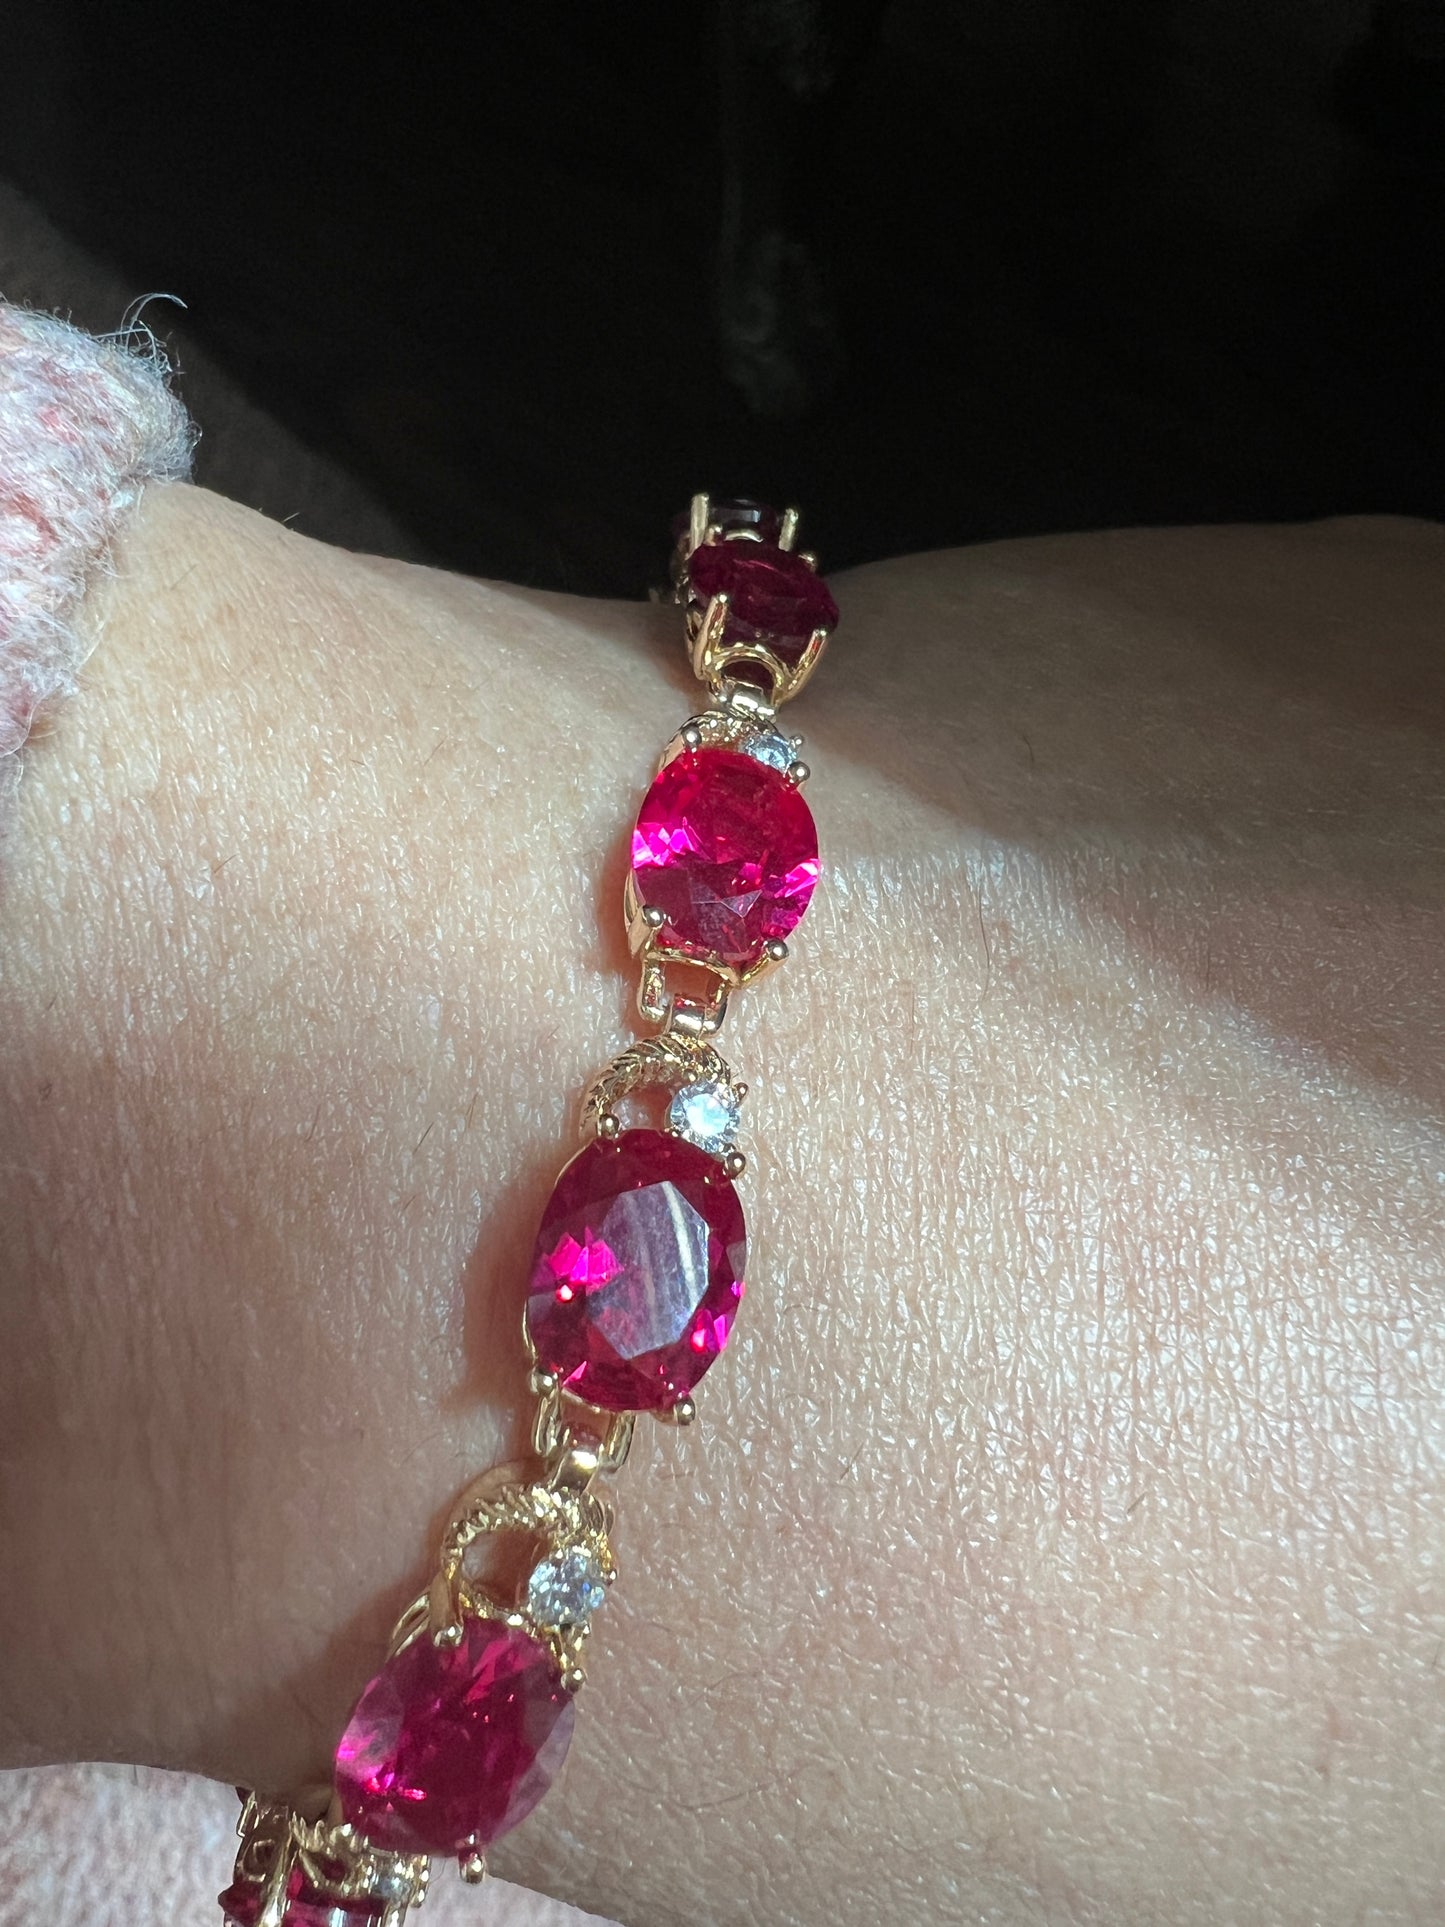 Ruby Dark Pink Zircons Gold Bracelet In Two Designs